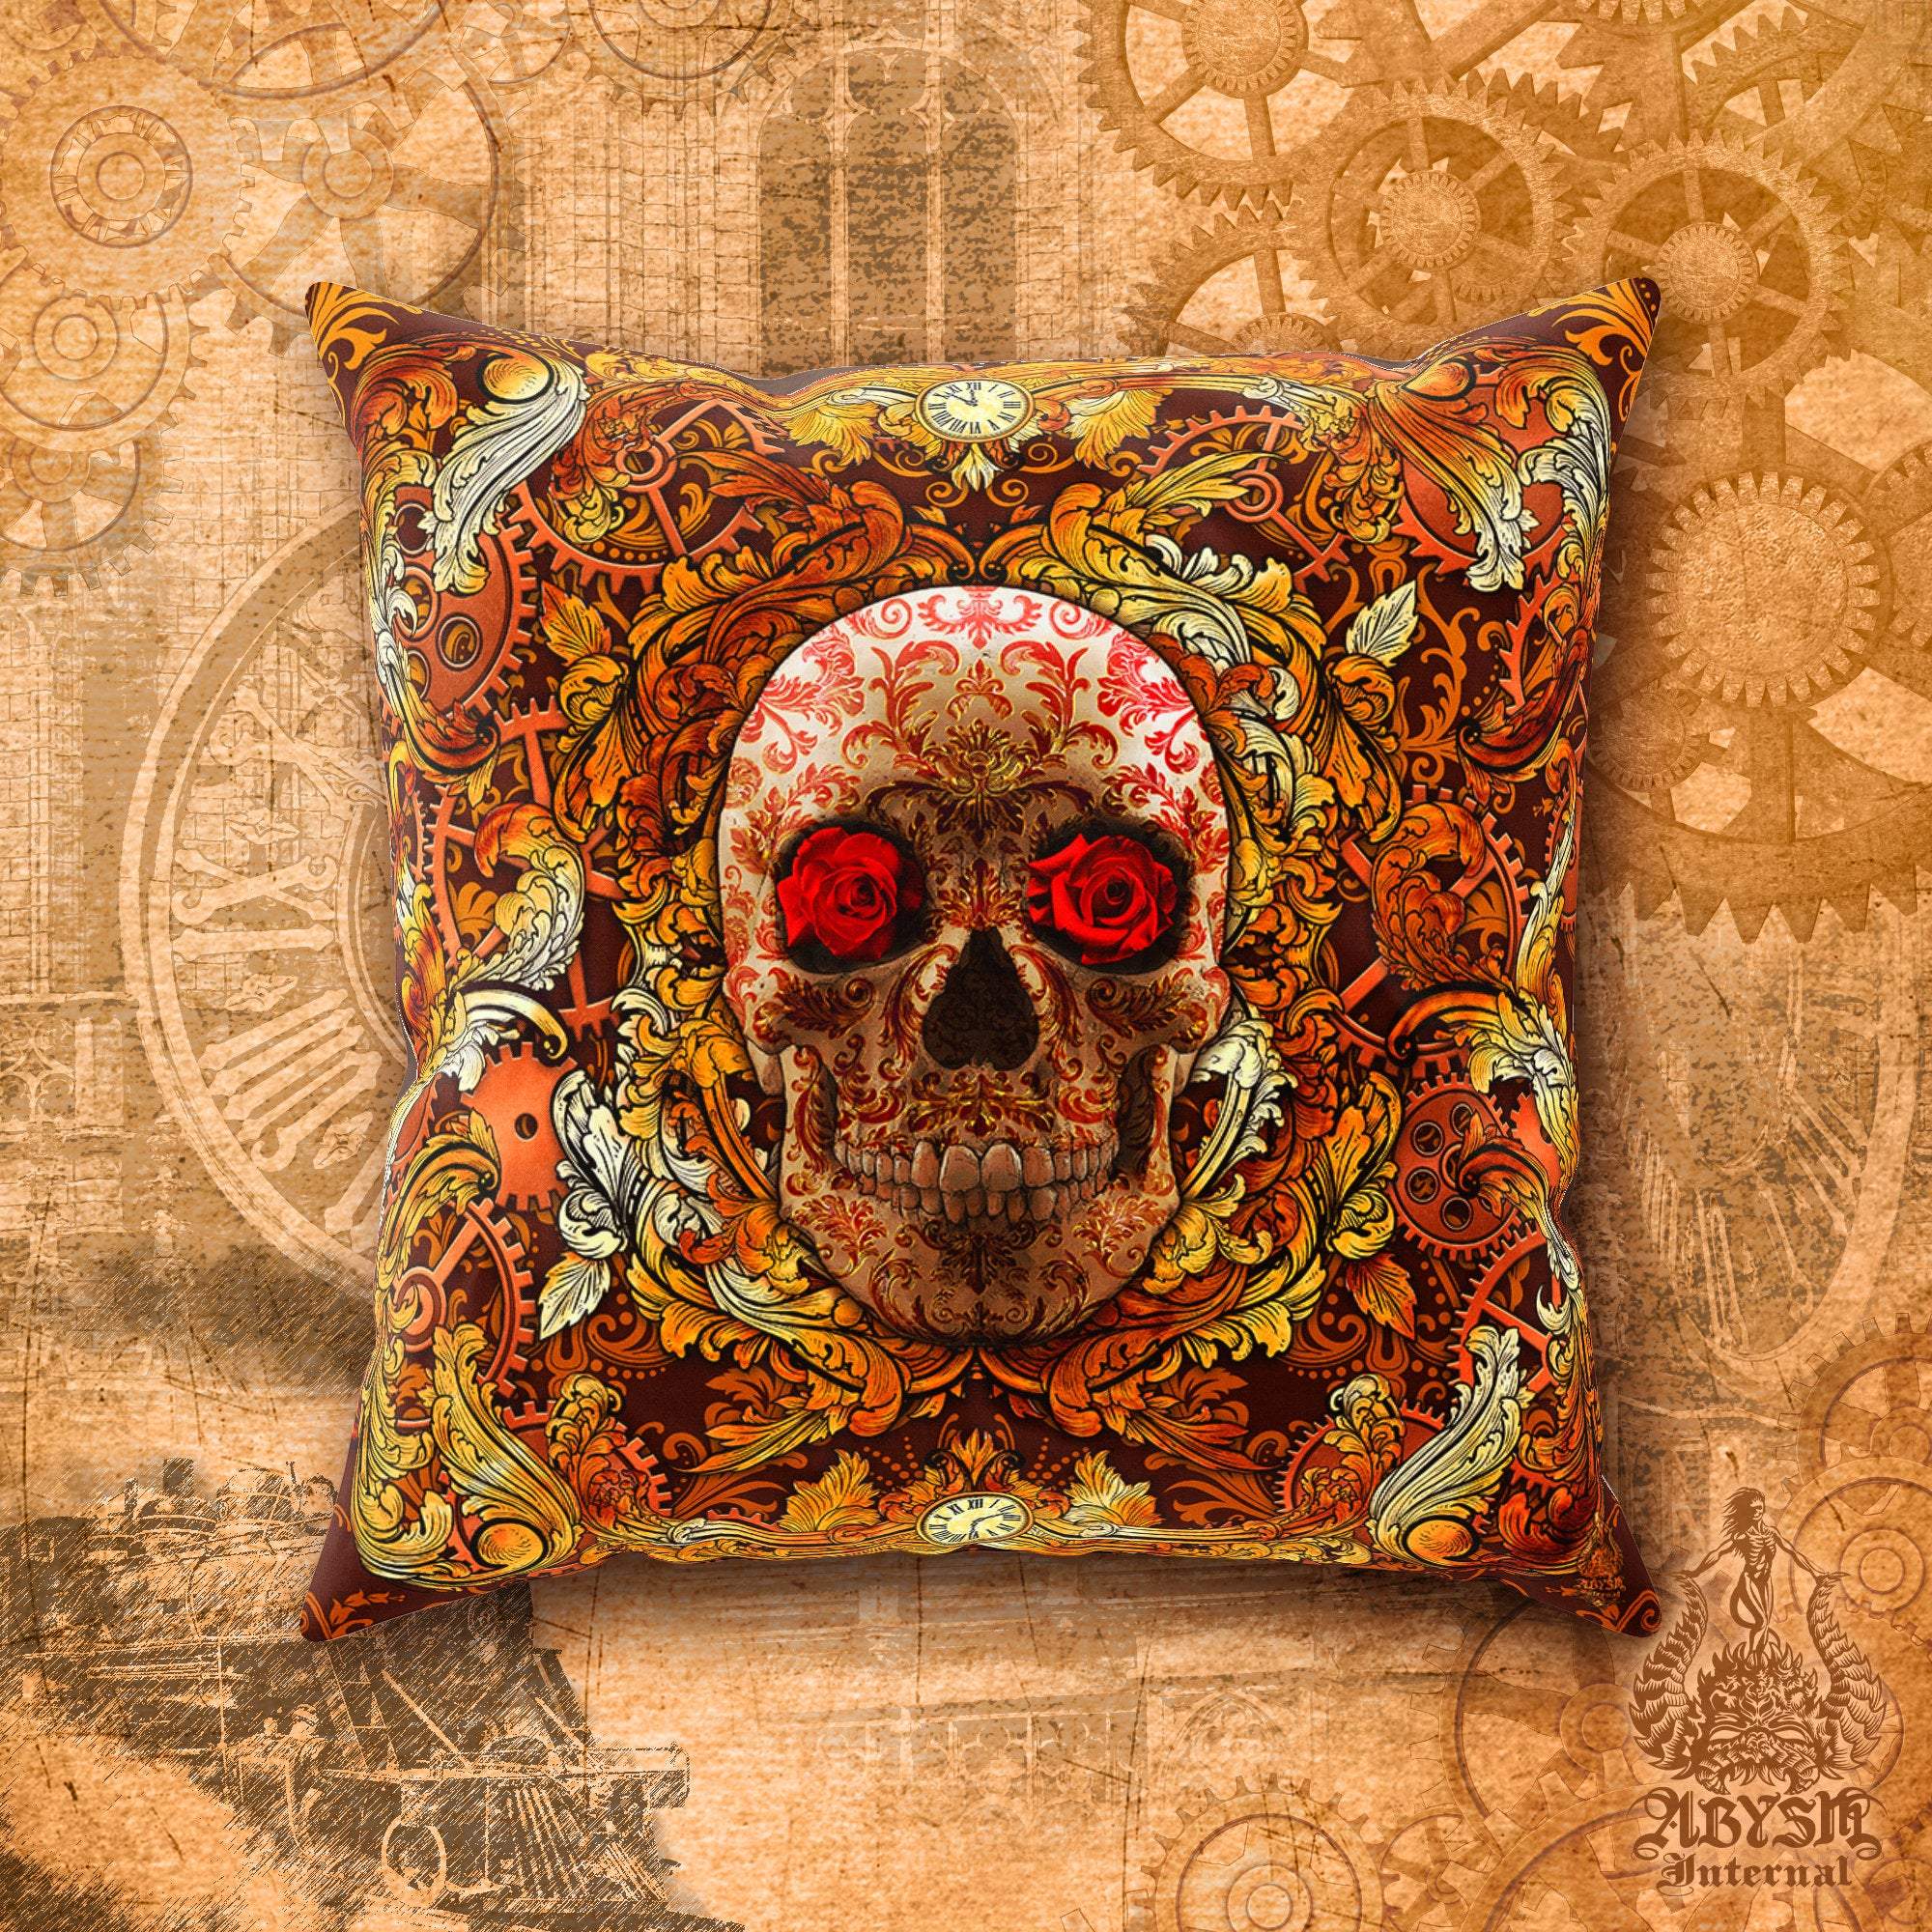 Steampunk Throw Pillow, Decorative Accent Cushion, Skull, Victorian Room Decor, Macabre Art - Abysm Internal